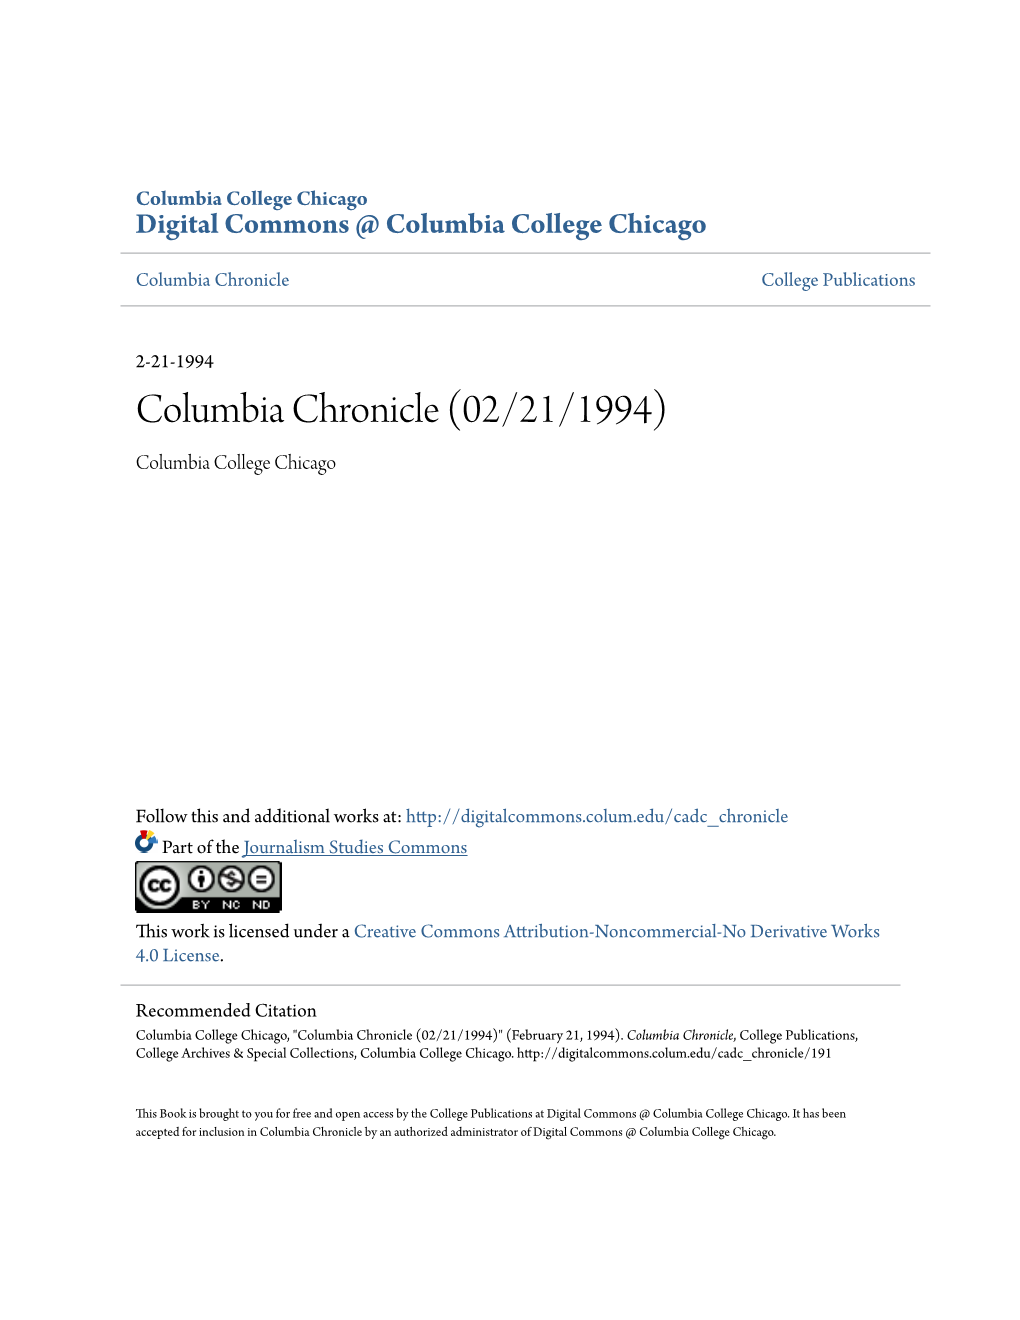 Columbia Chronicle (02/21/1994) Columbia College Chicago